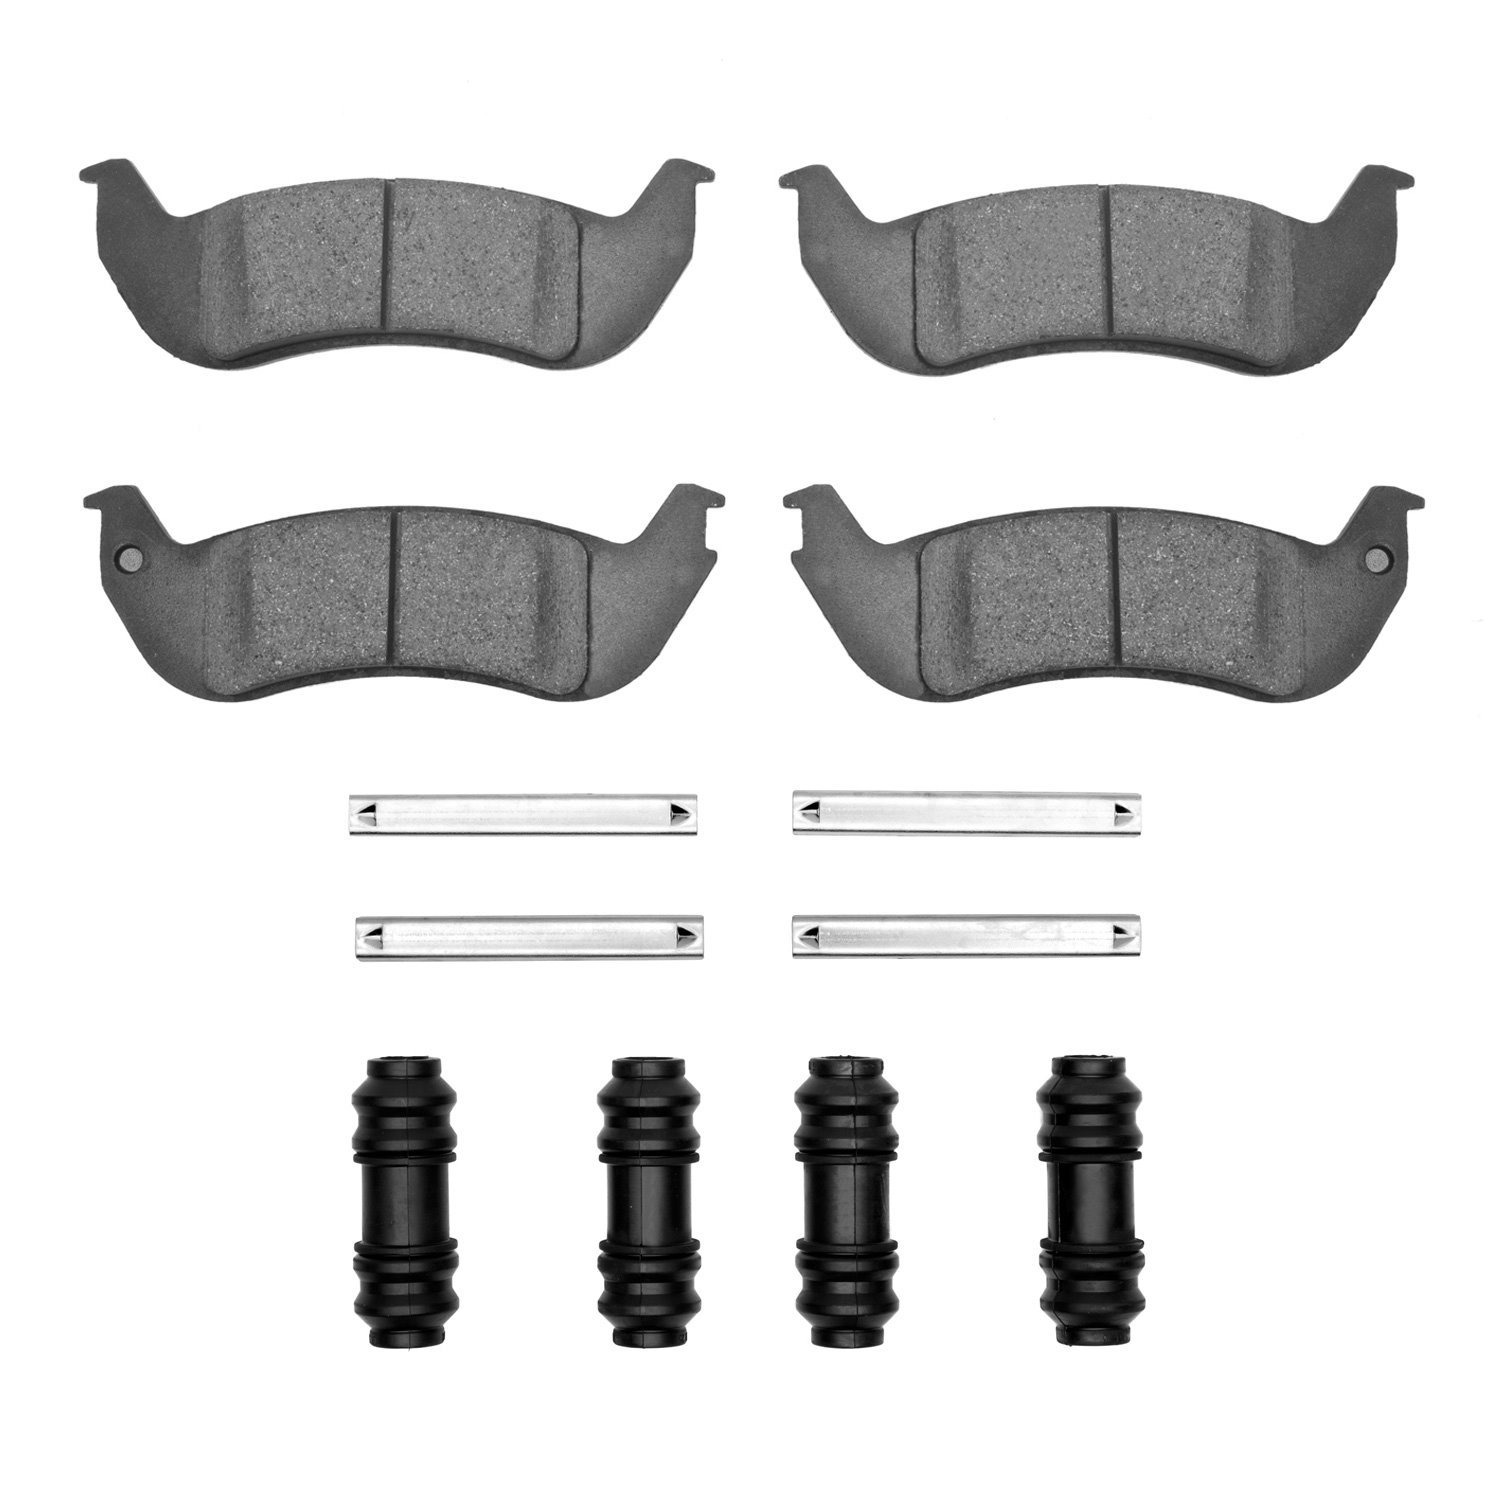 1310-0932-01 3000-Series Ceramic Brake Pads & Hardware Kit, 2003-2011 Ford/Lincoln/Mercury/Mazda, Position: Rear